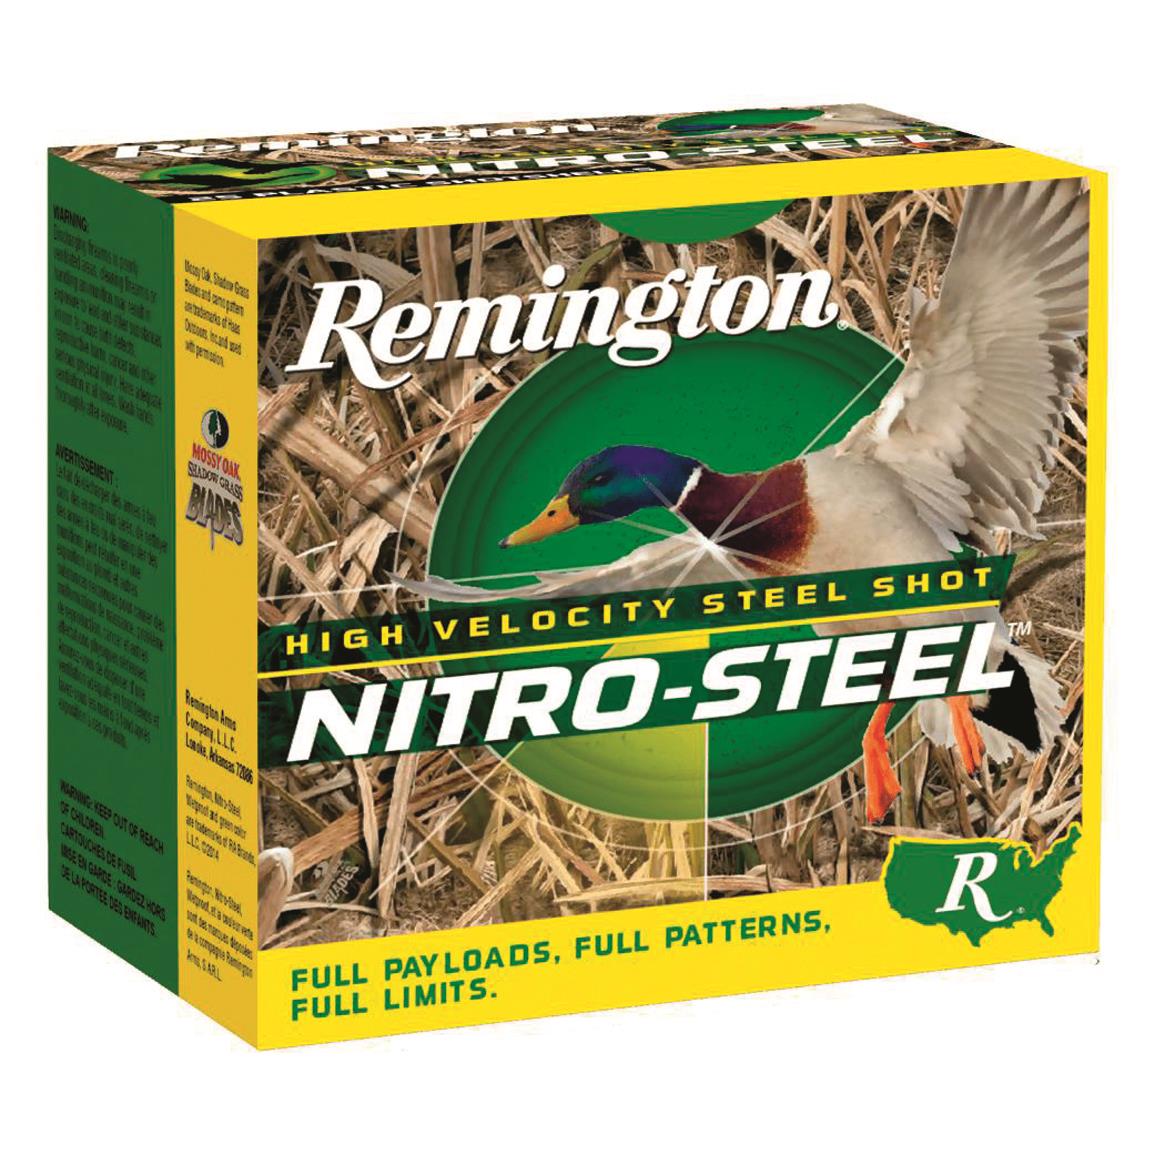 Remington Nitro-Steel High-Velocity, 12 Gauge, 2 3/4" Shot Shells, 1 1/8 oz., 250 Rounds